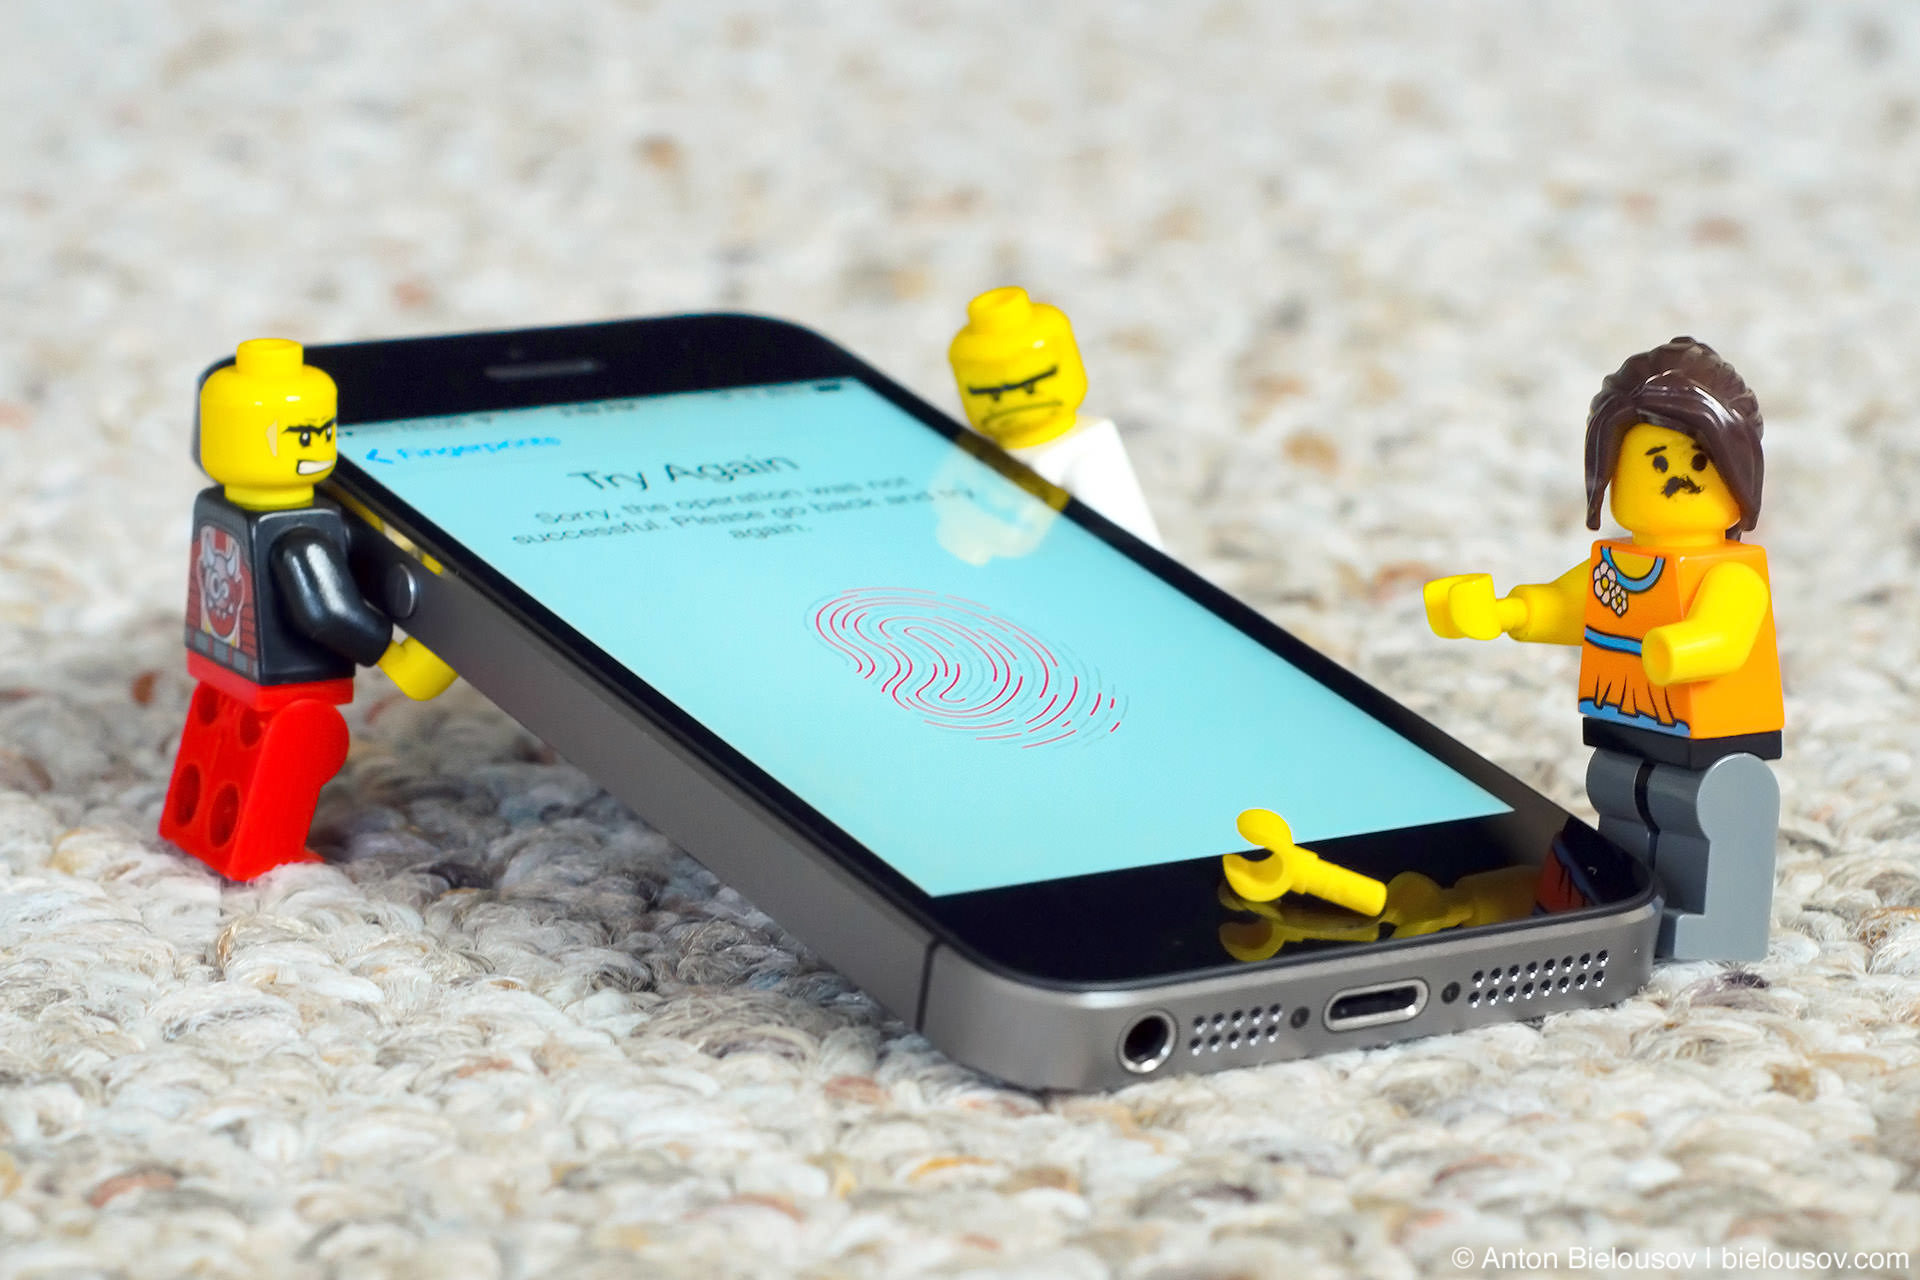 Lego Proof: iPhone 5's fingerprint reader won't work with a severed finger